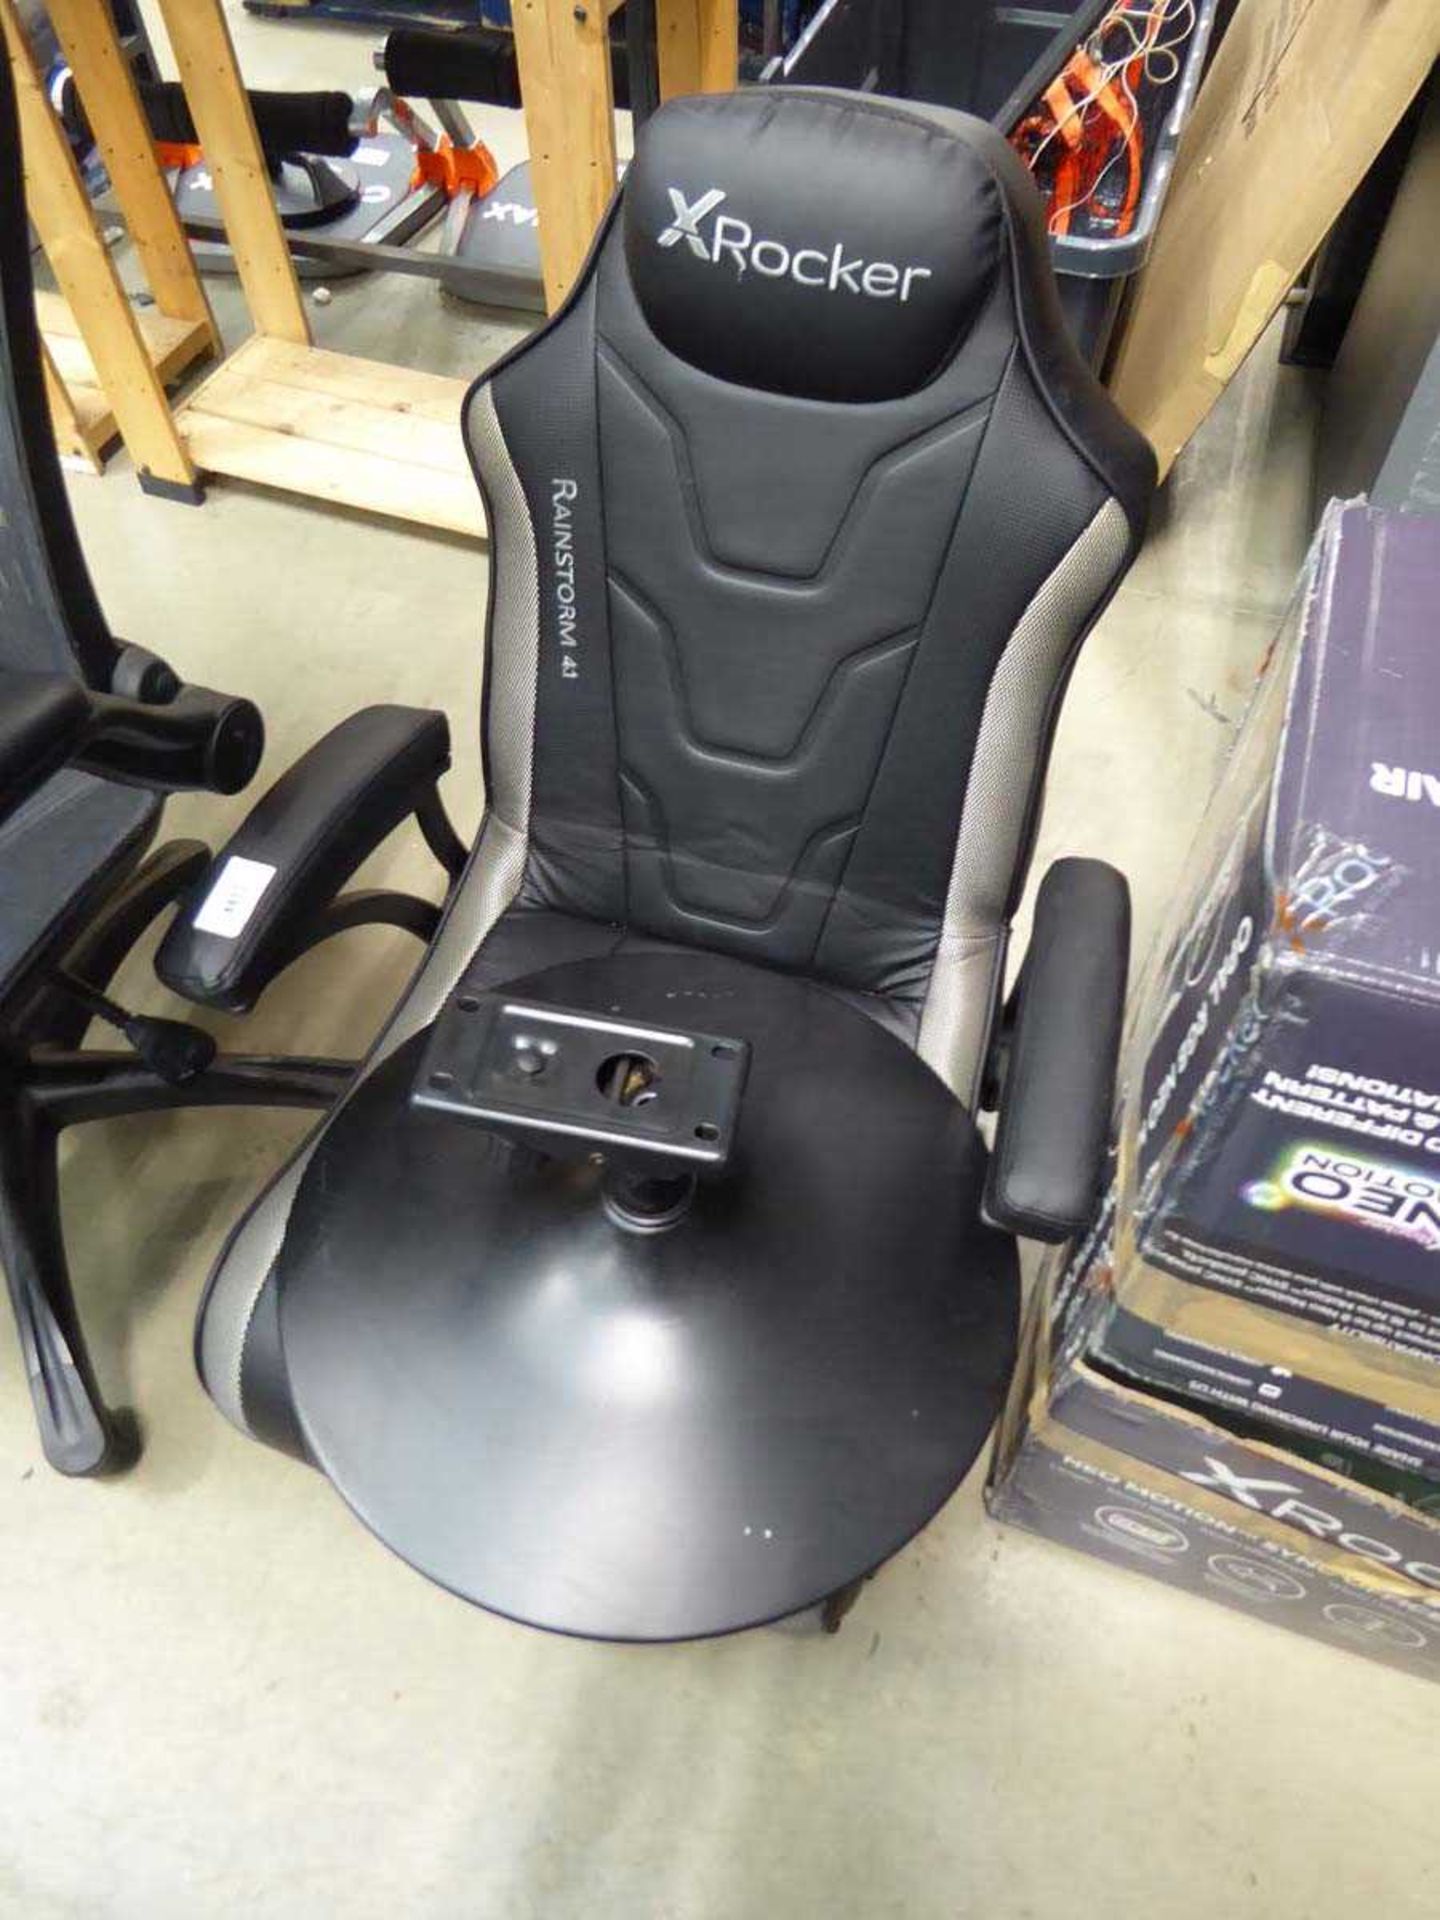 +VAT X Rocker unboxed gaming chair